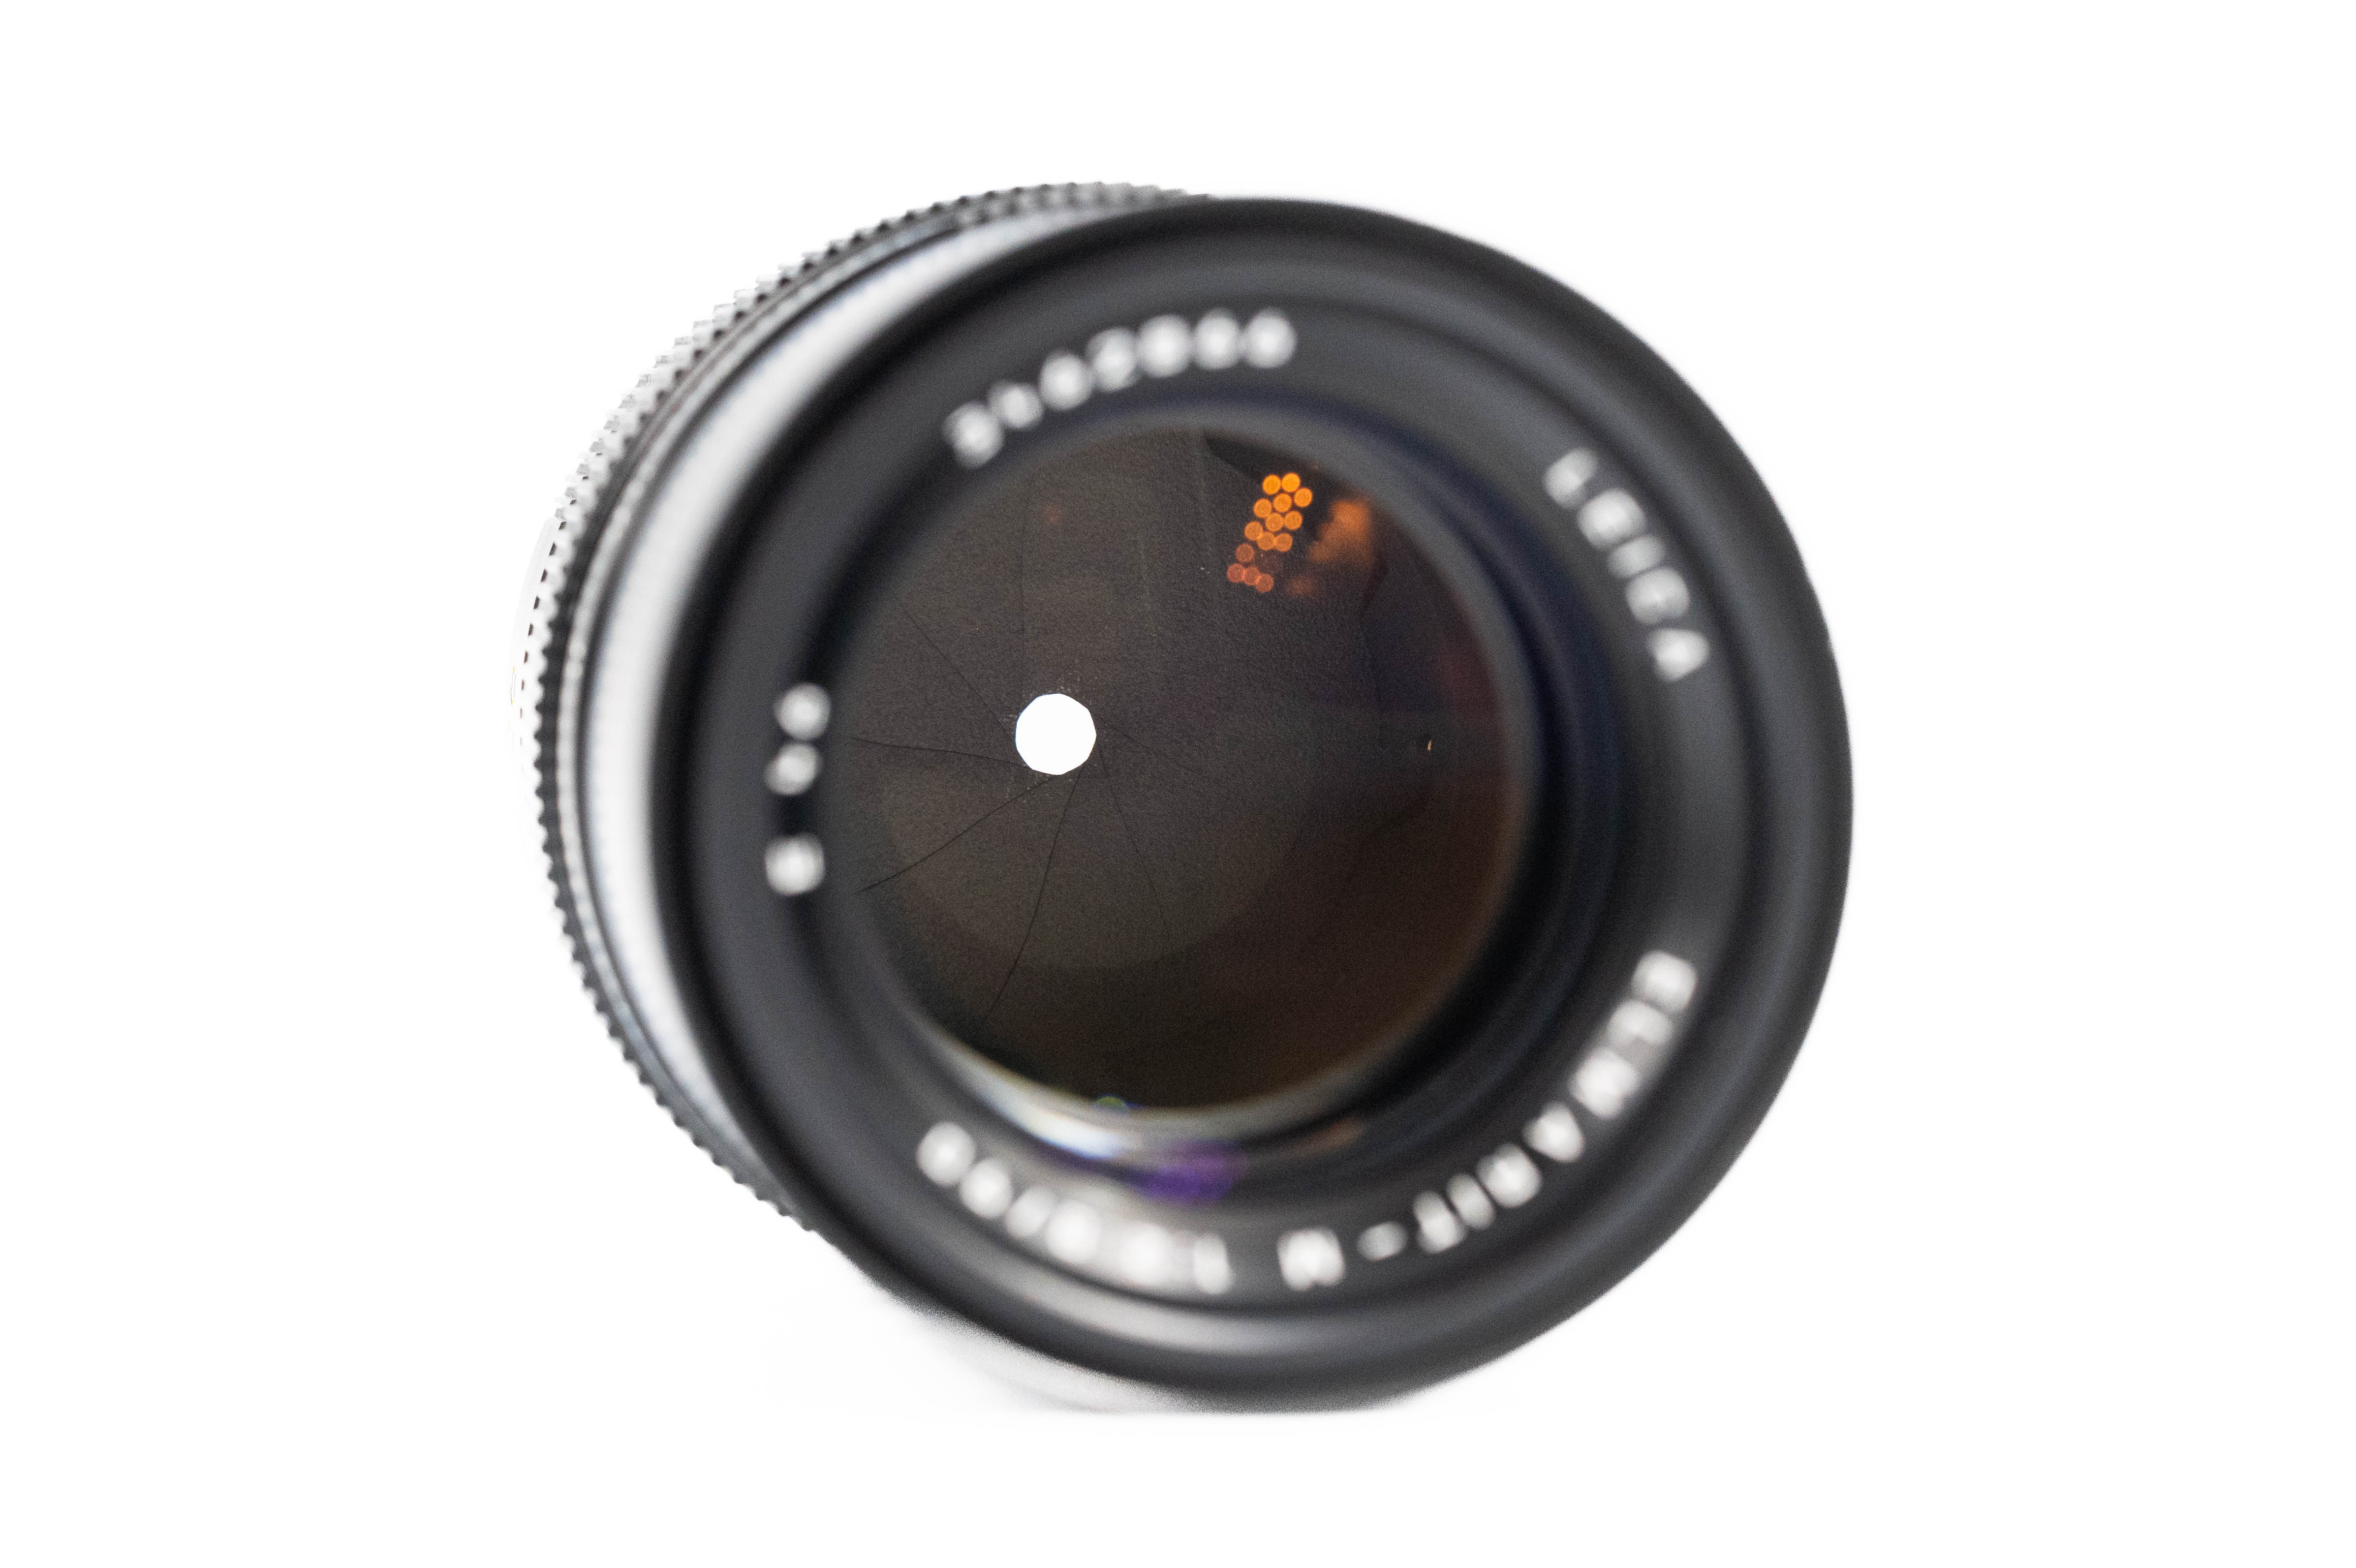 Leica Elmarit-M 90mm f/2.8 11807